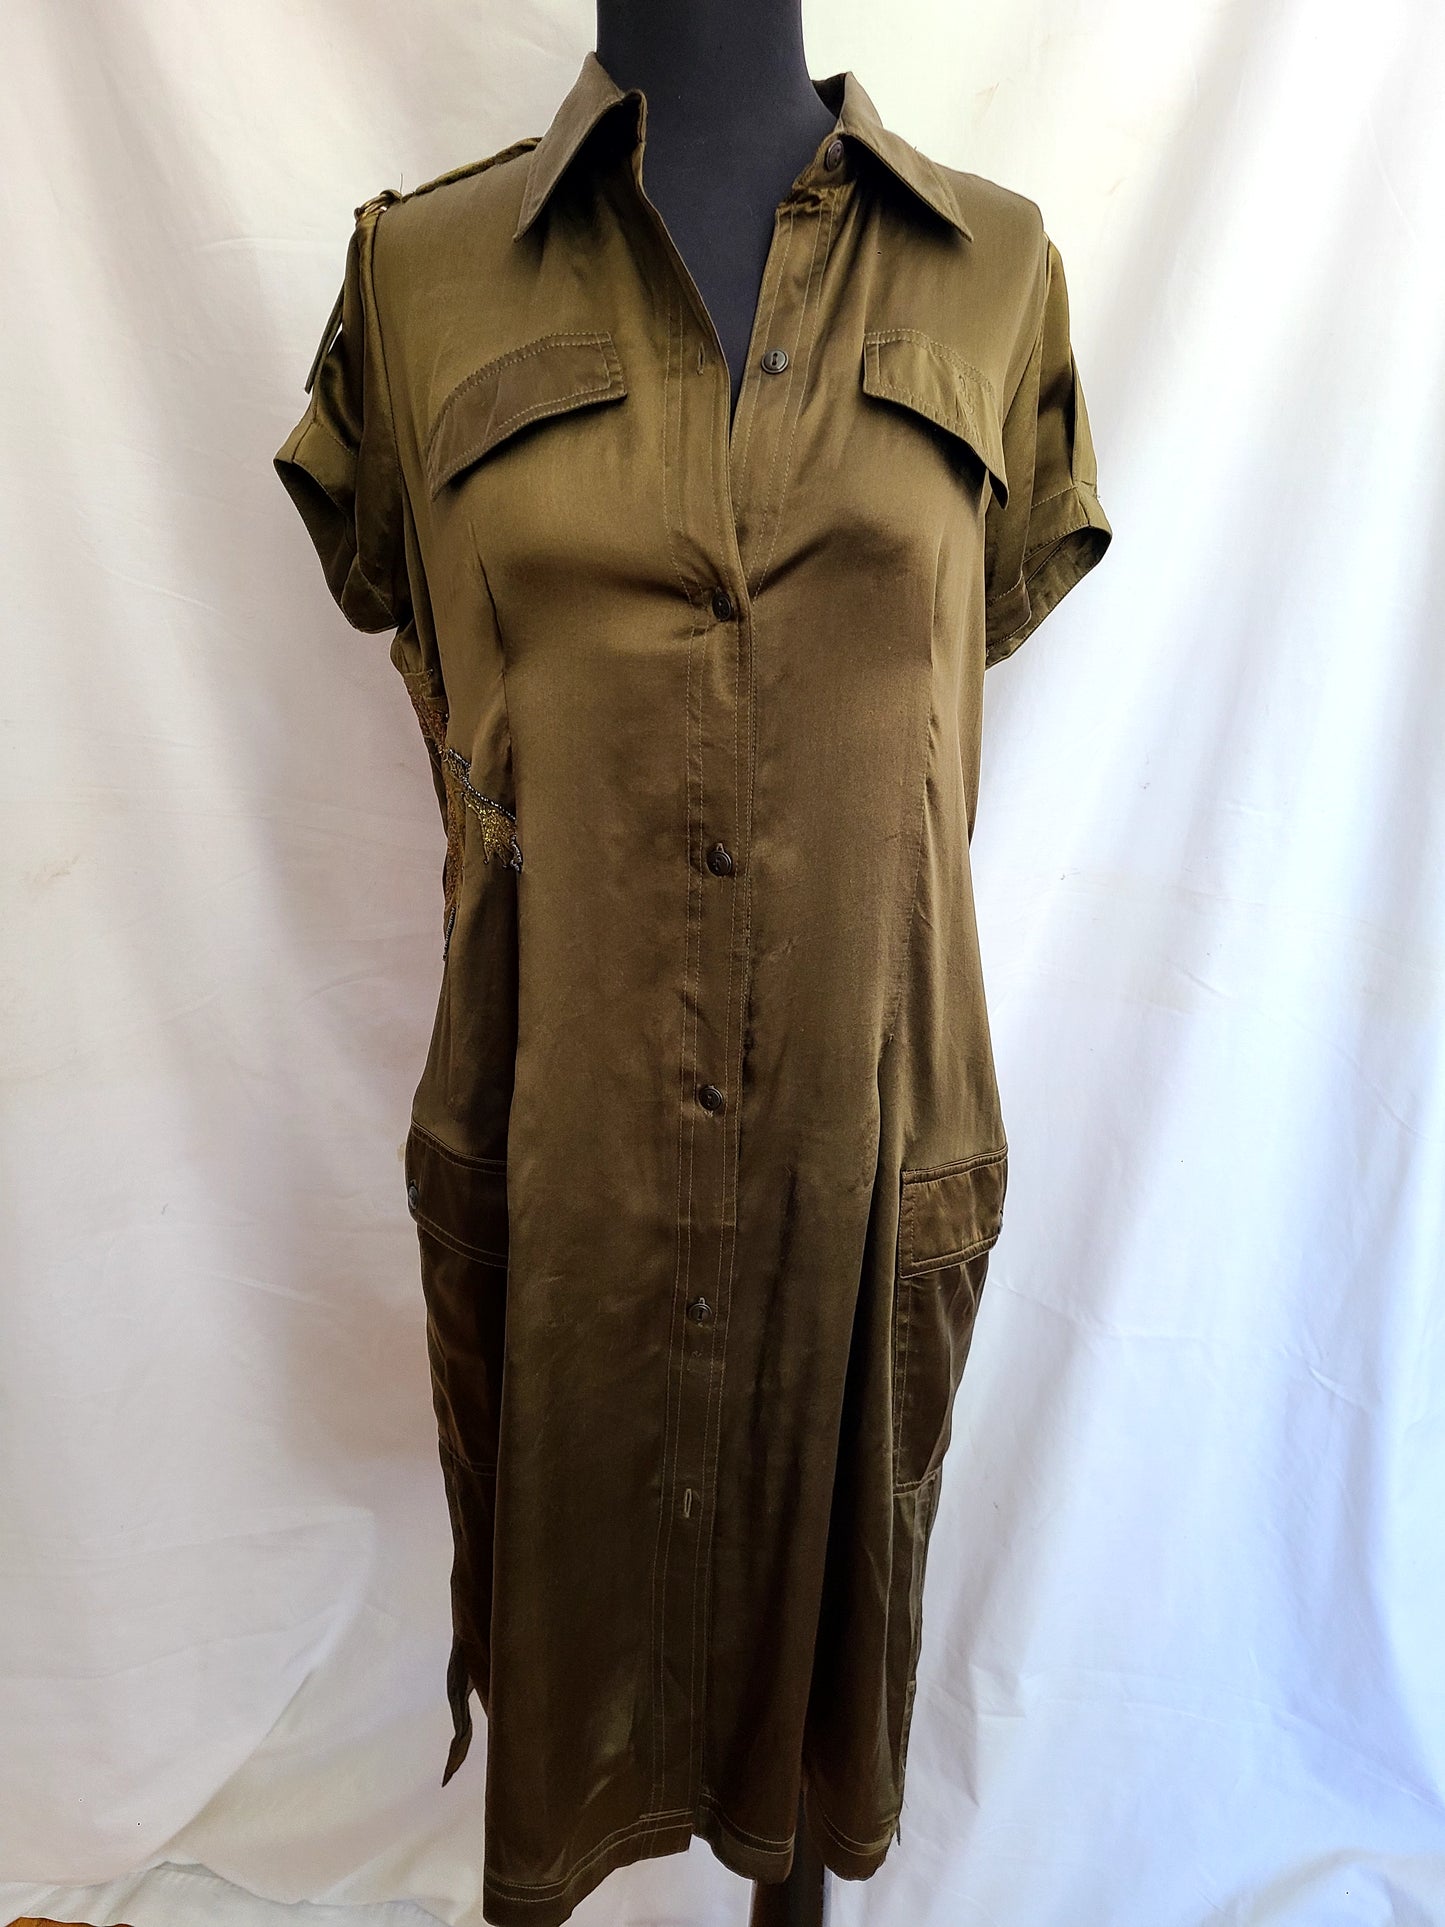 Arayal Olive Silk Beaded Embellished Dragon Detail Dress - EU Size 42 / US Size 8